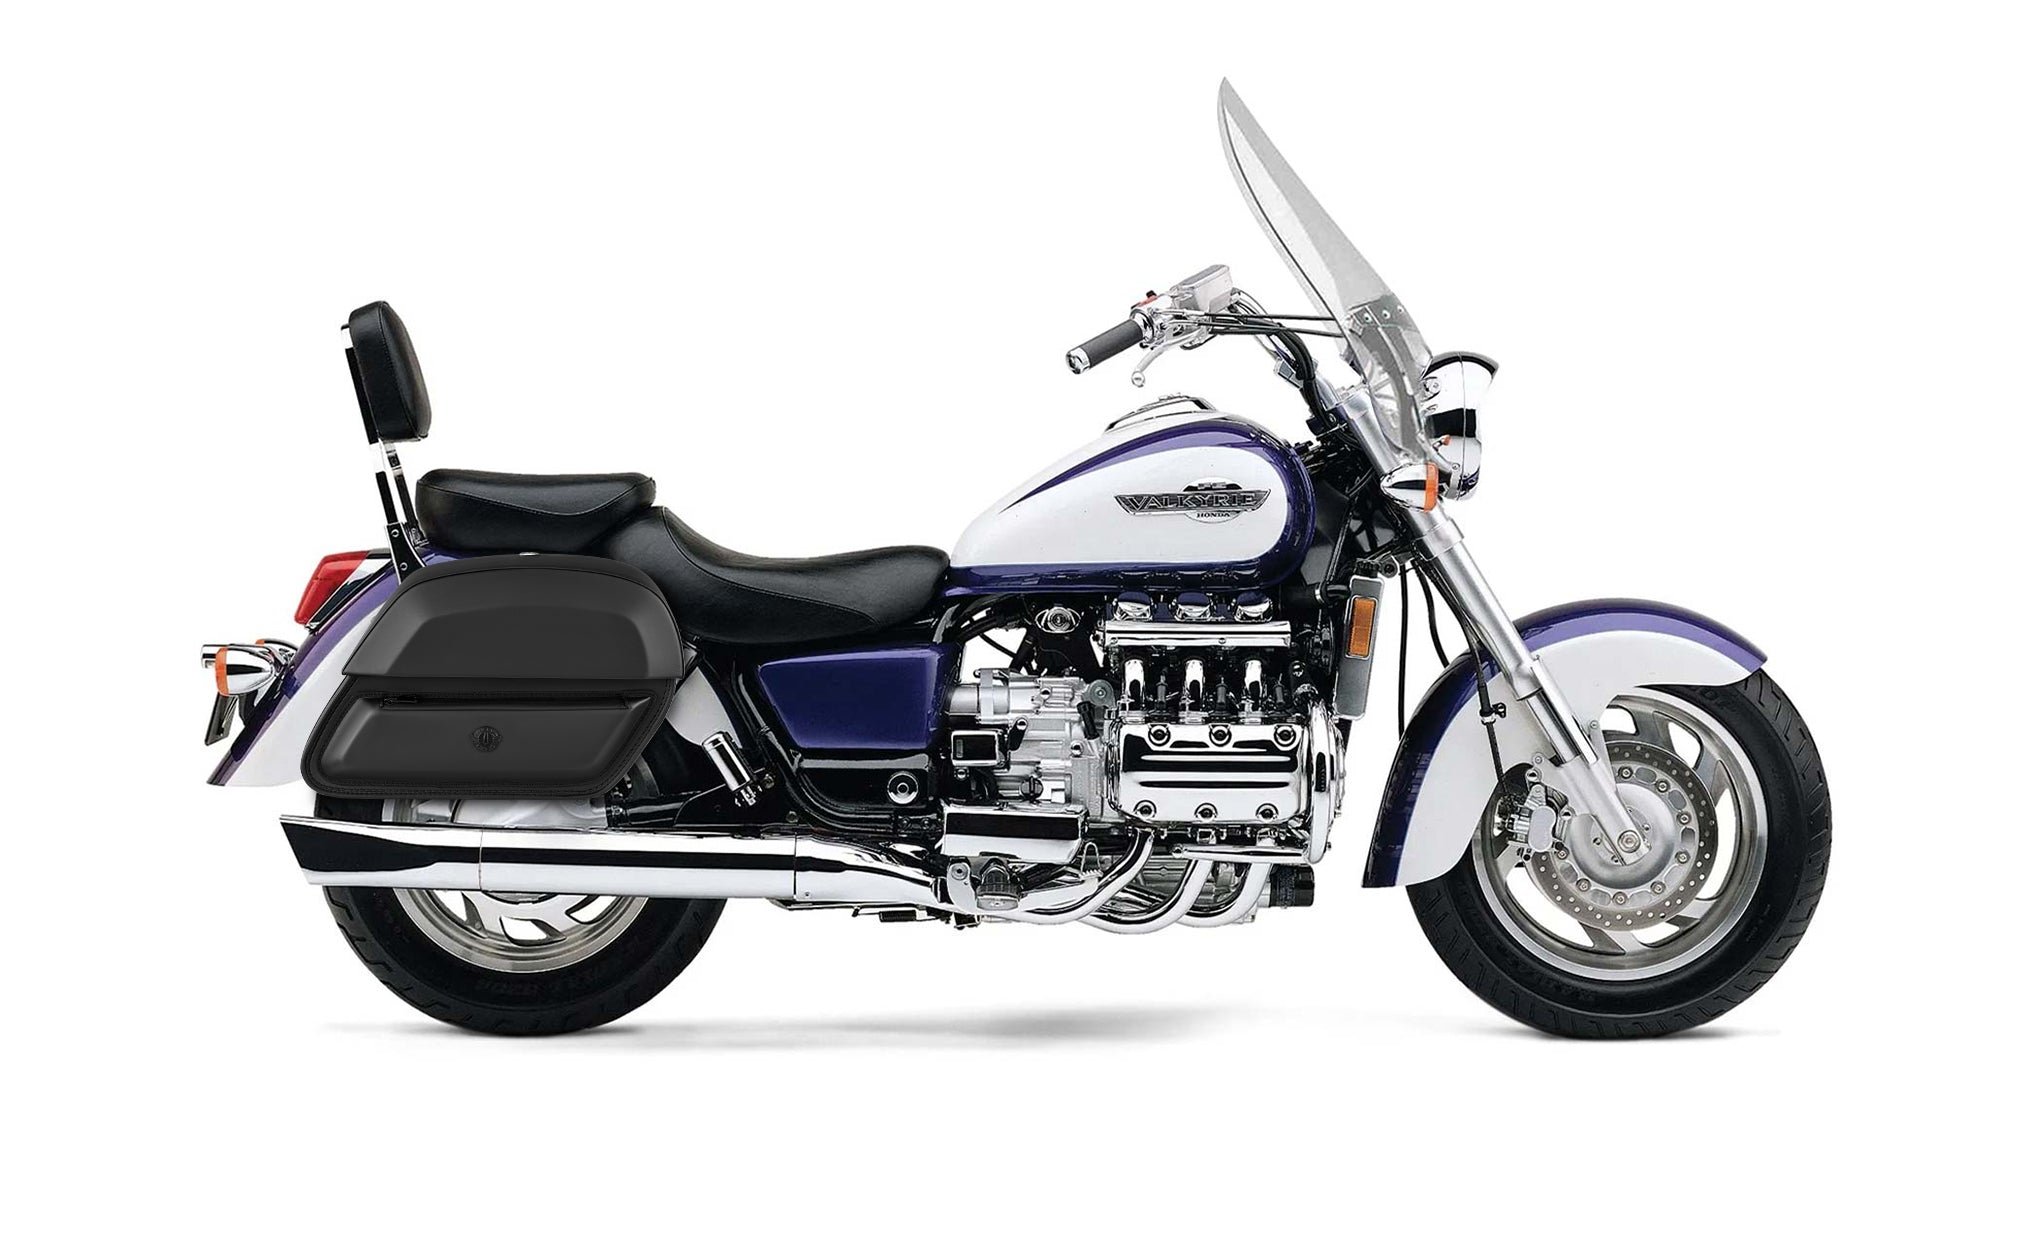 28L - Wraith Medium Honda Valkyrie 1500 Tourer Leather Motorcycle Saddlebags BAG on Bike View @expand